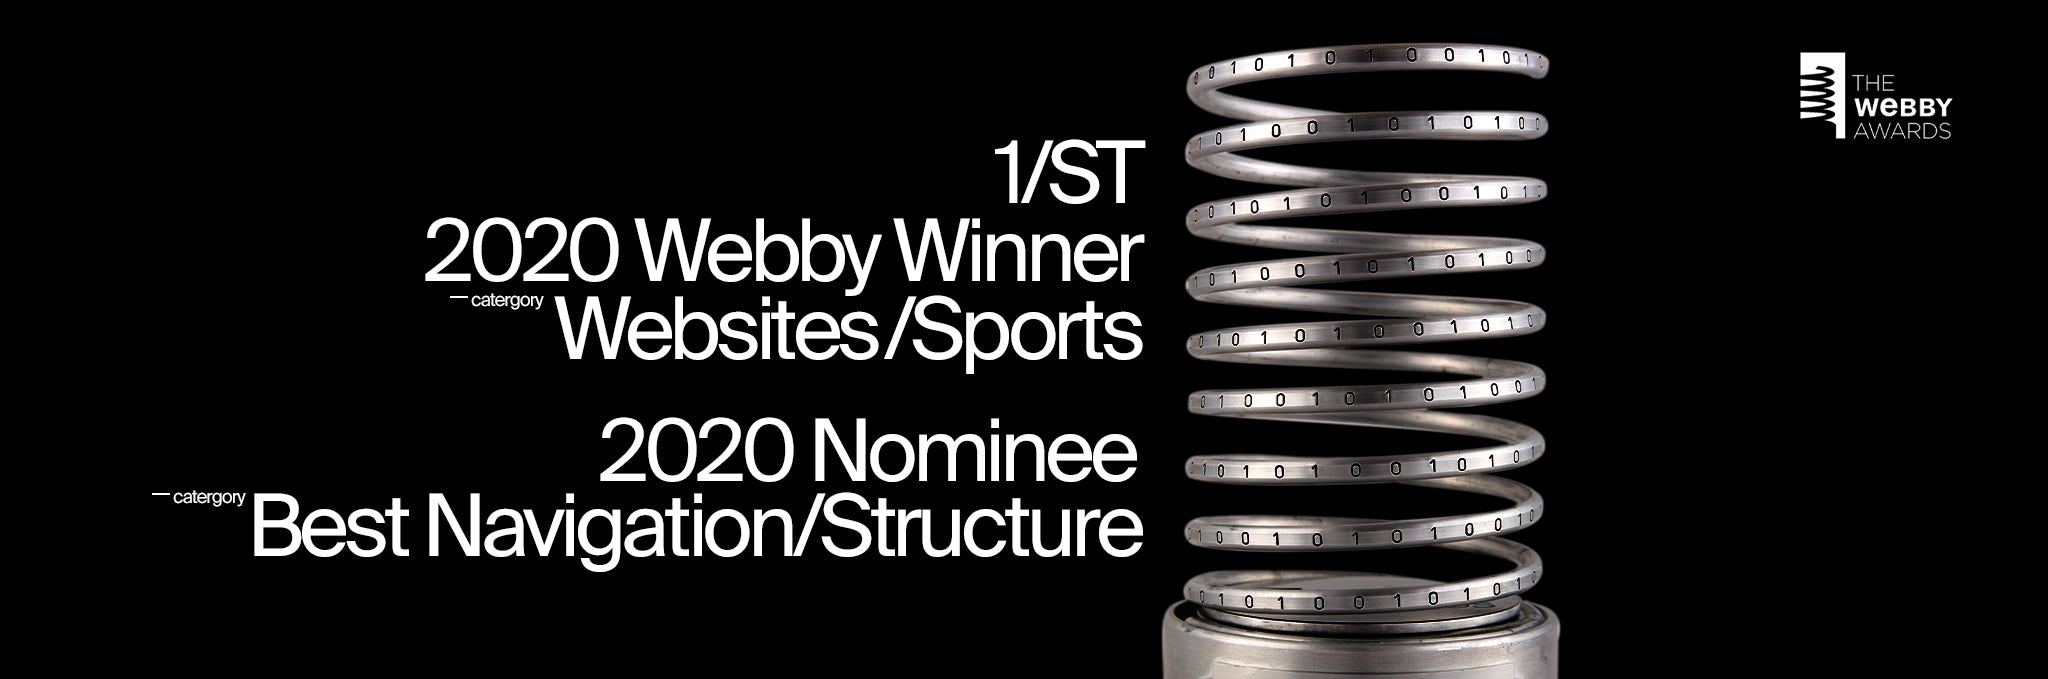 deep-sleep-studio-webby-award-1st-website_